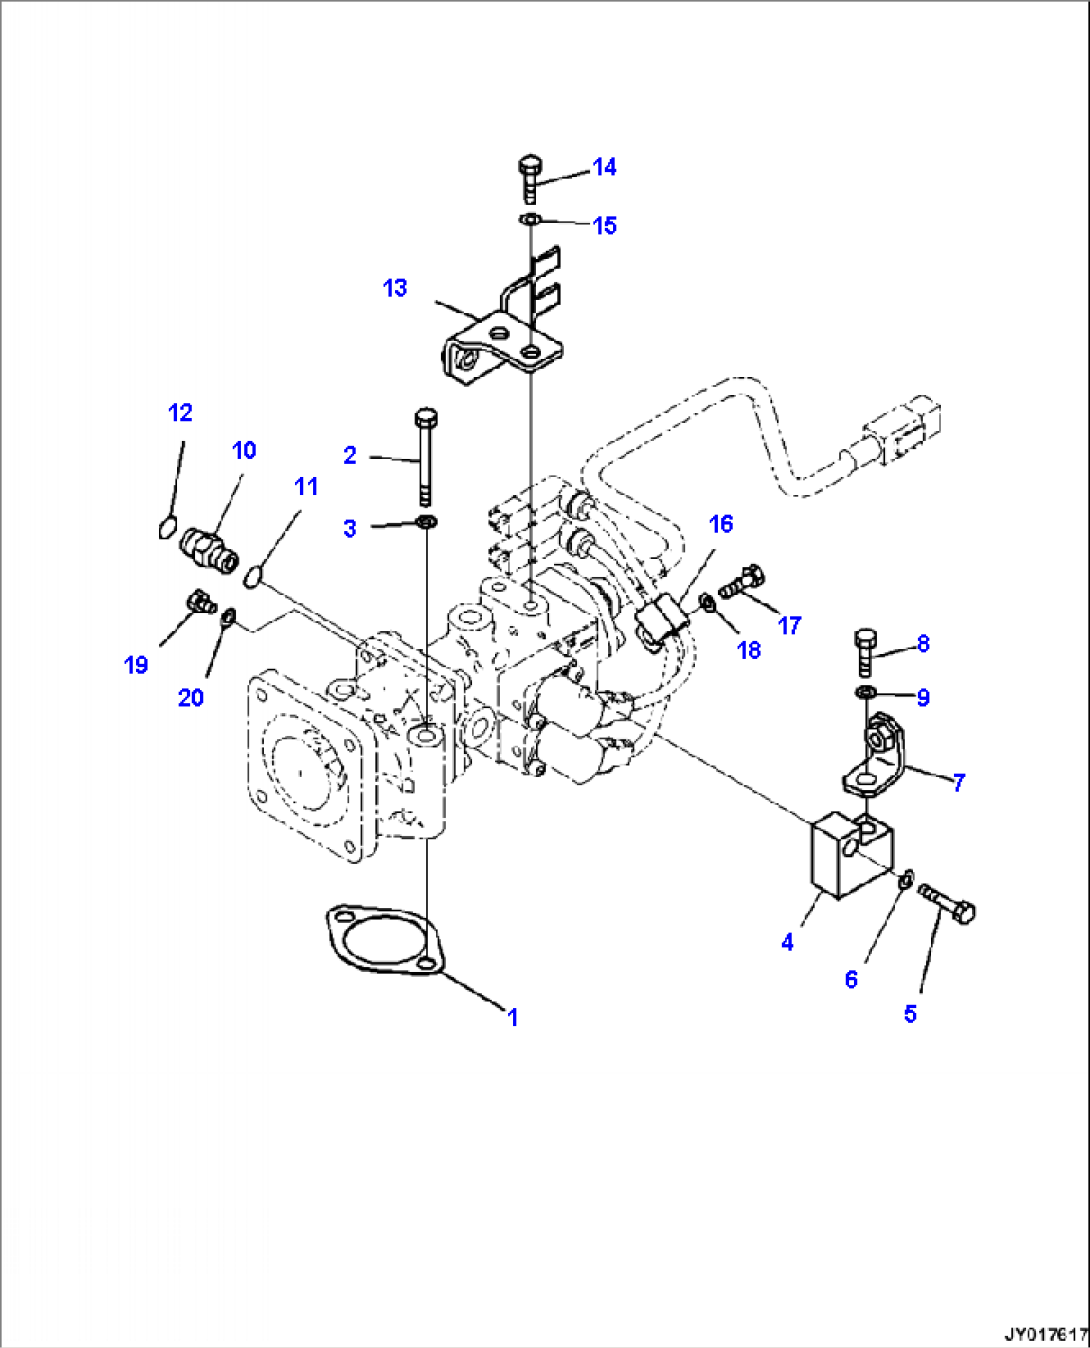 A1216-A2B0 EXHAUST GAS RECIRCULATION (EGR) VALVE MOUNTING